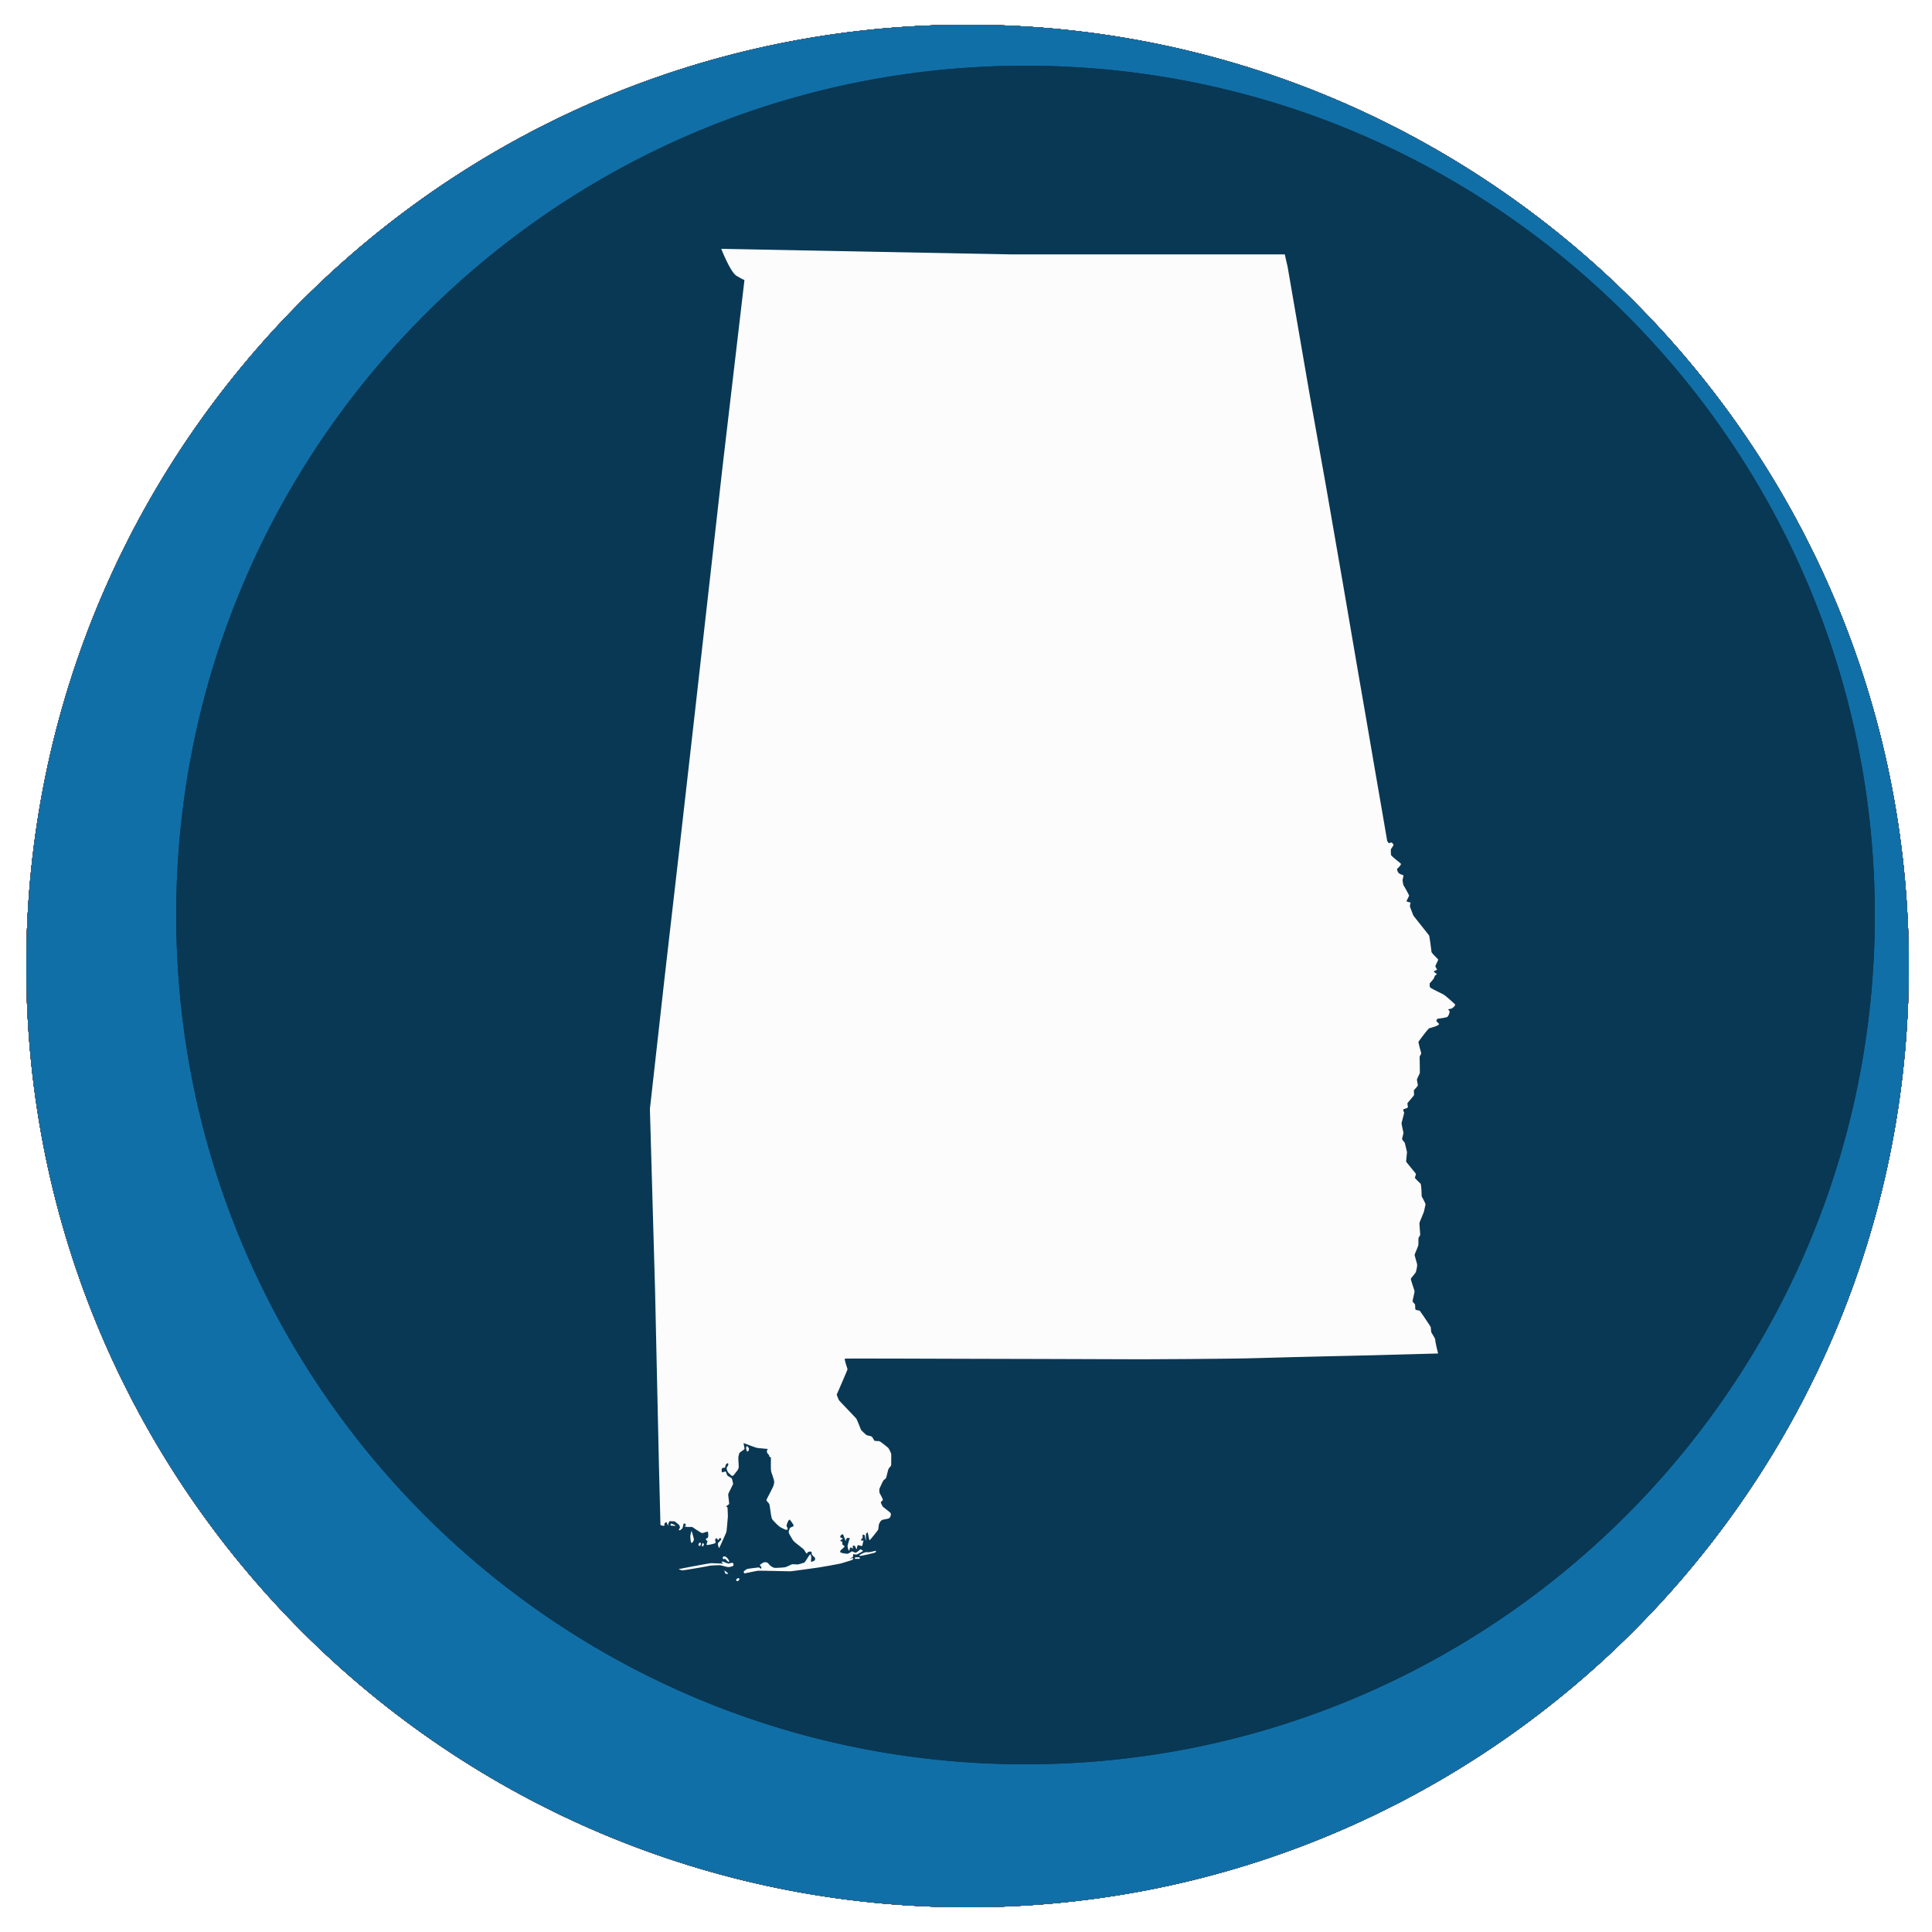 Alabama state shape in a circle